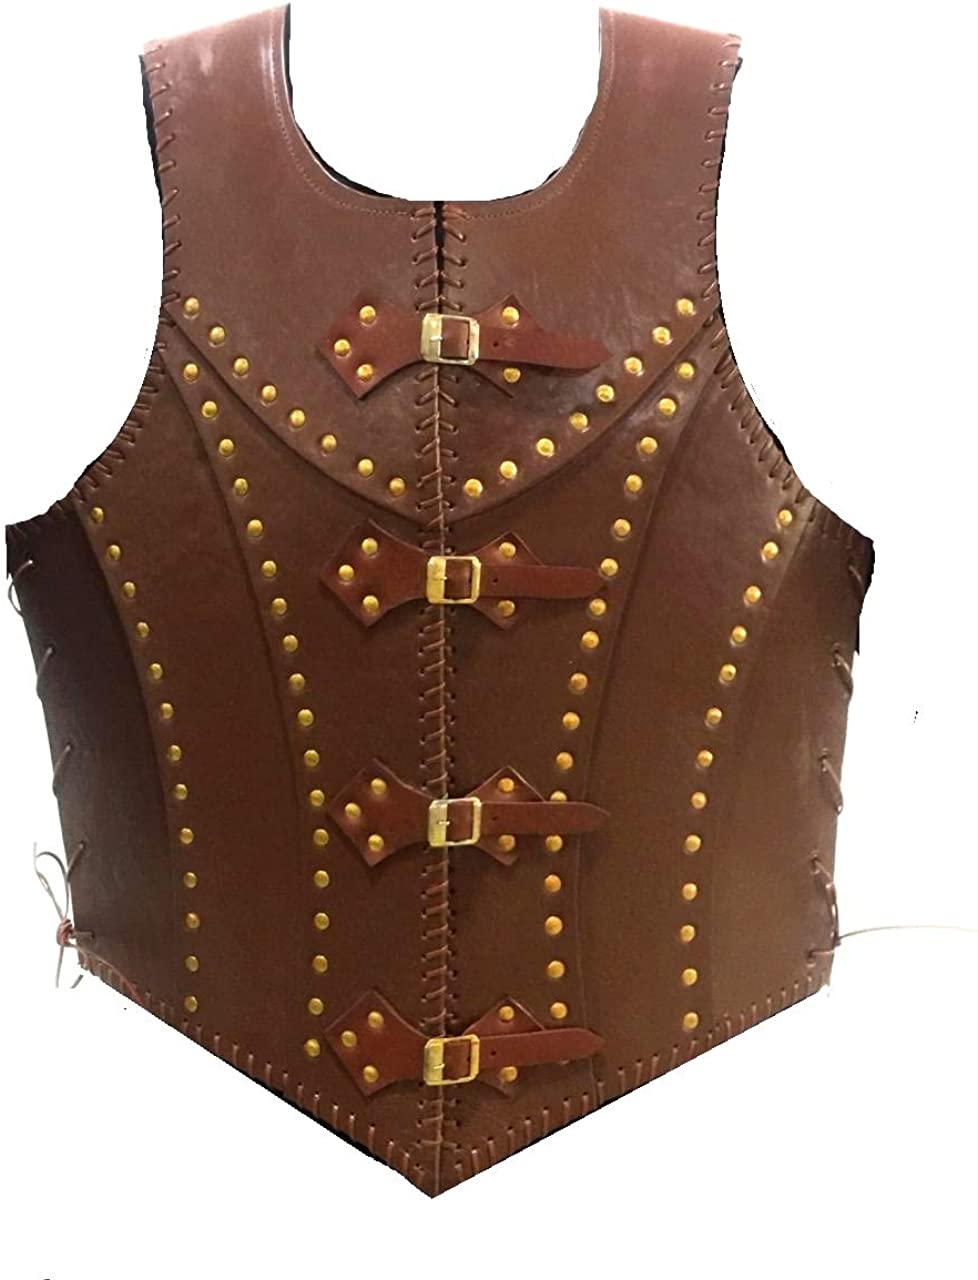 Handmade Leather Vest